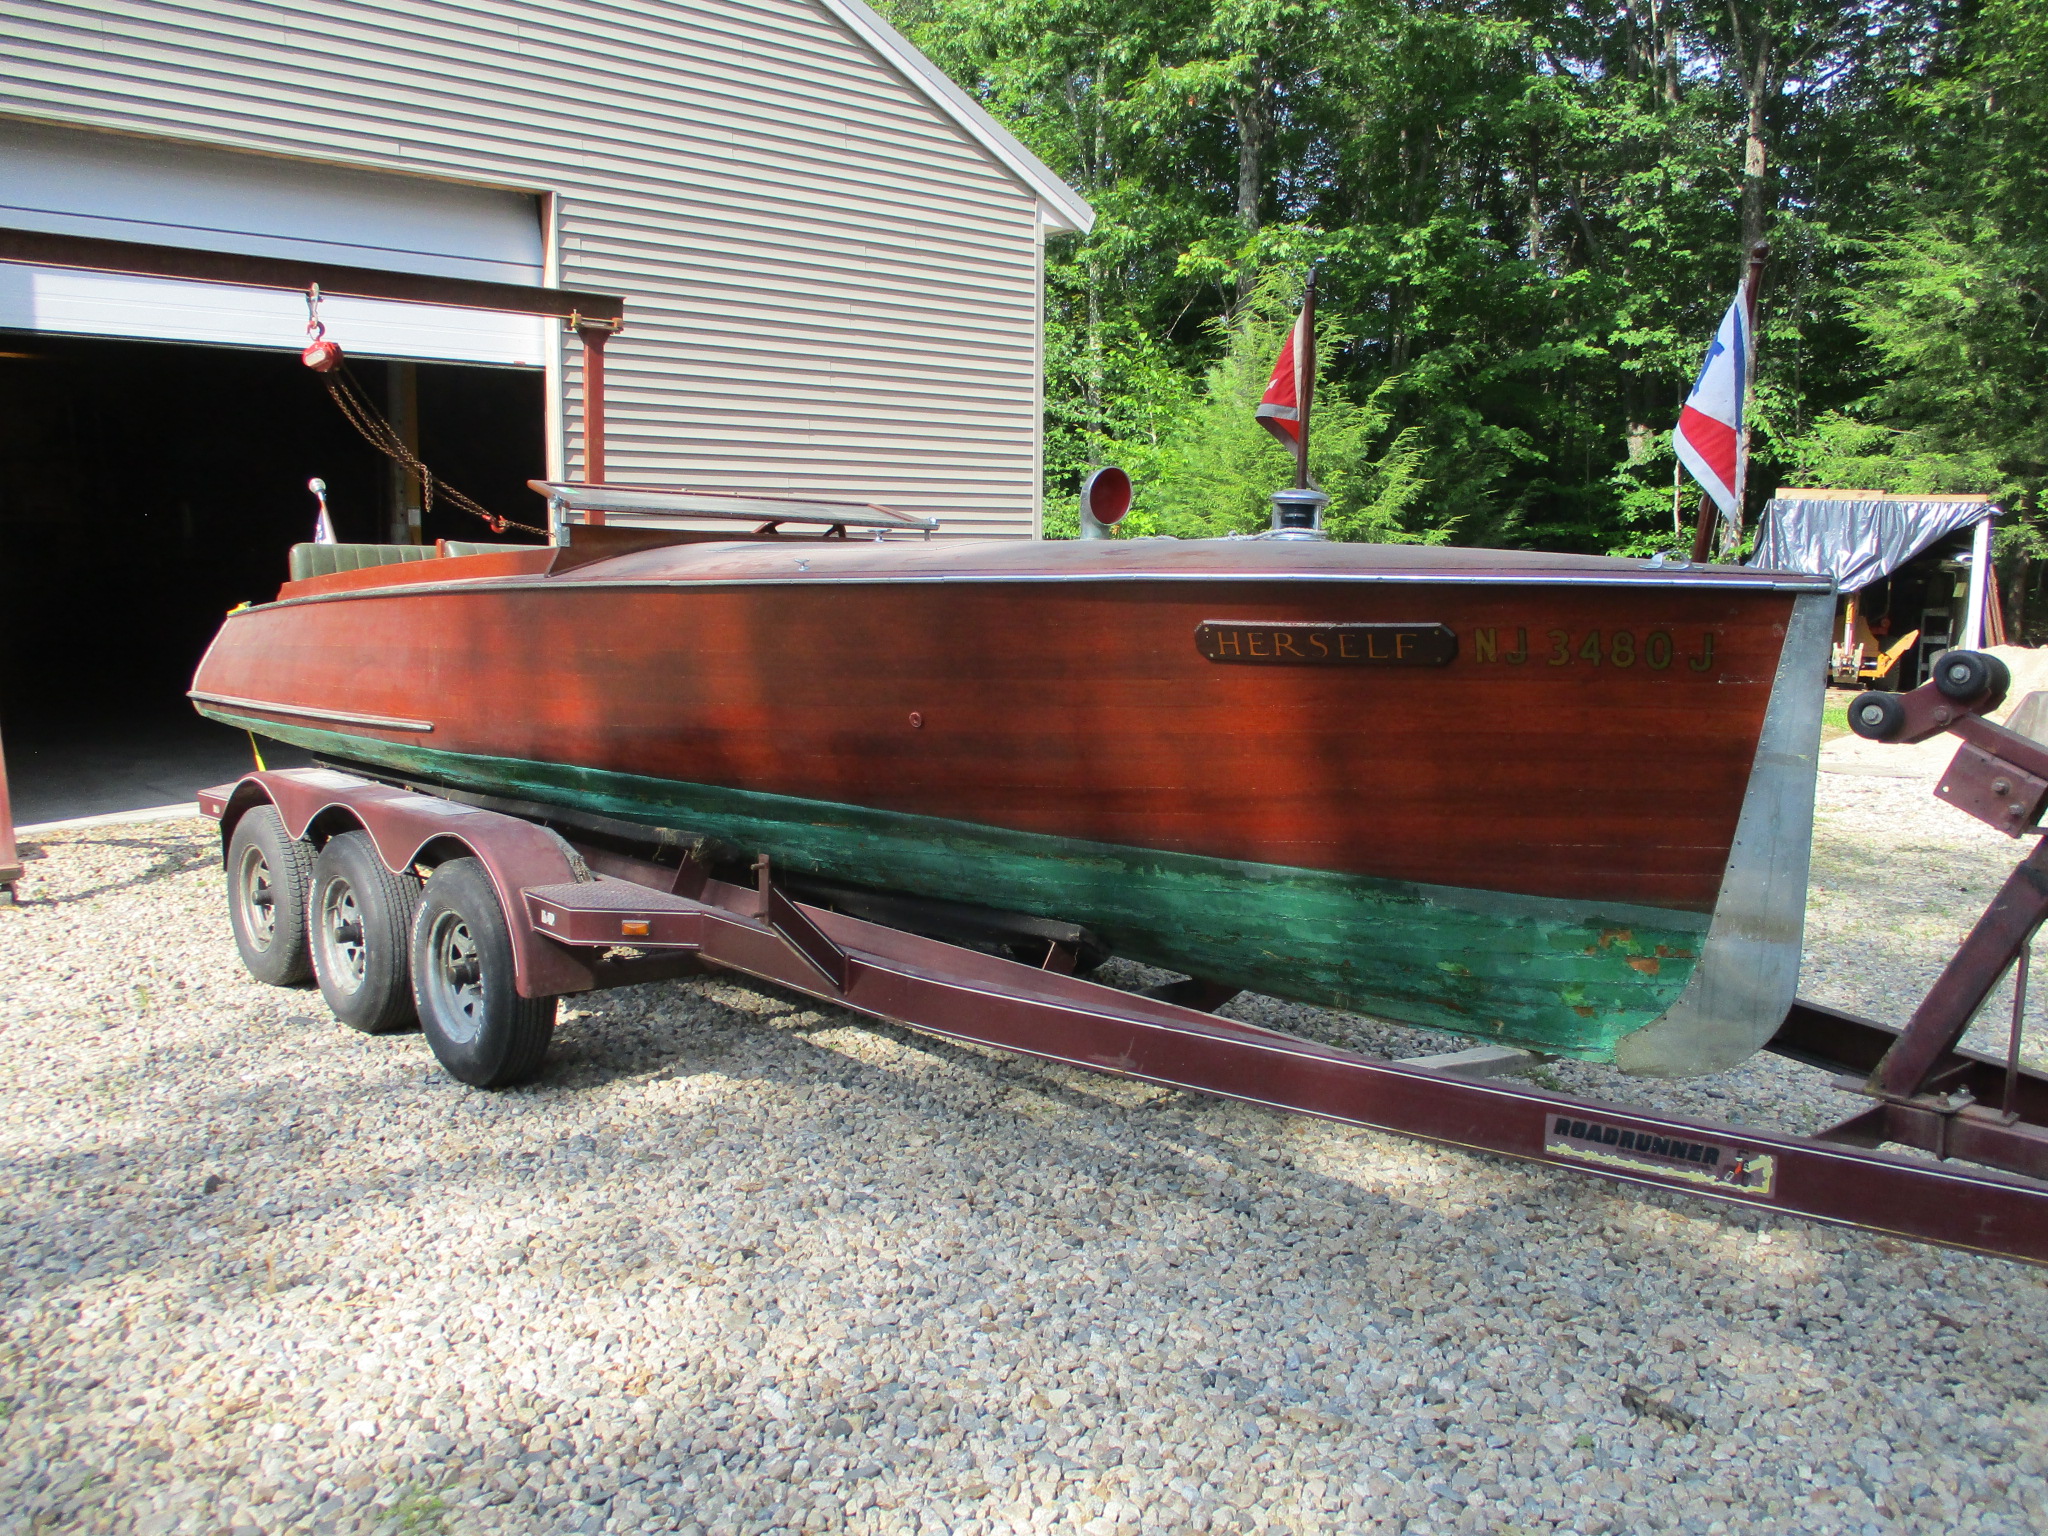 Classic1930 Yacht 22" Built Wood Model Sailboat Assembled